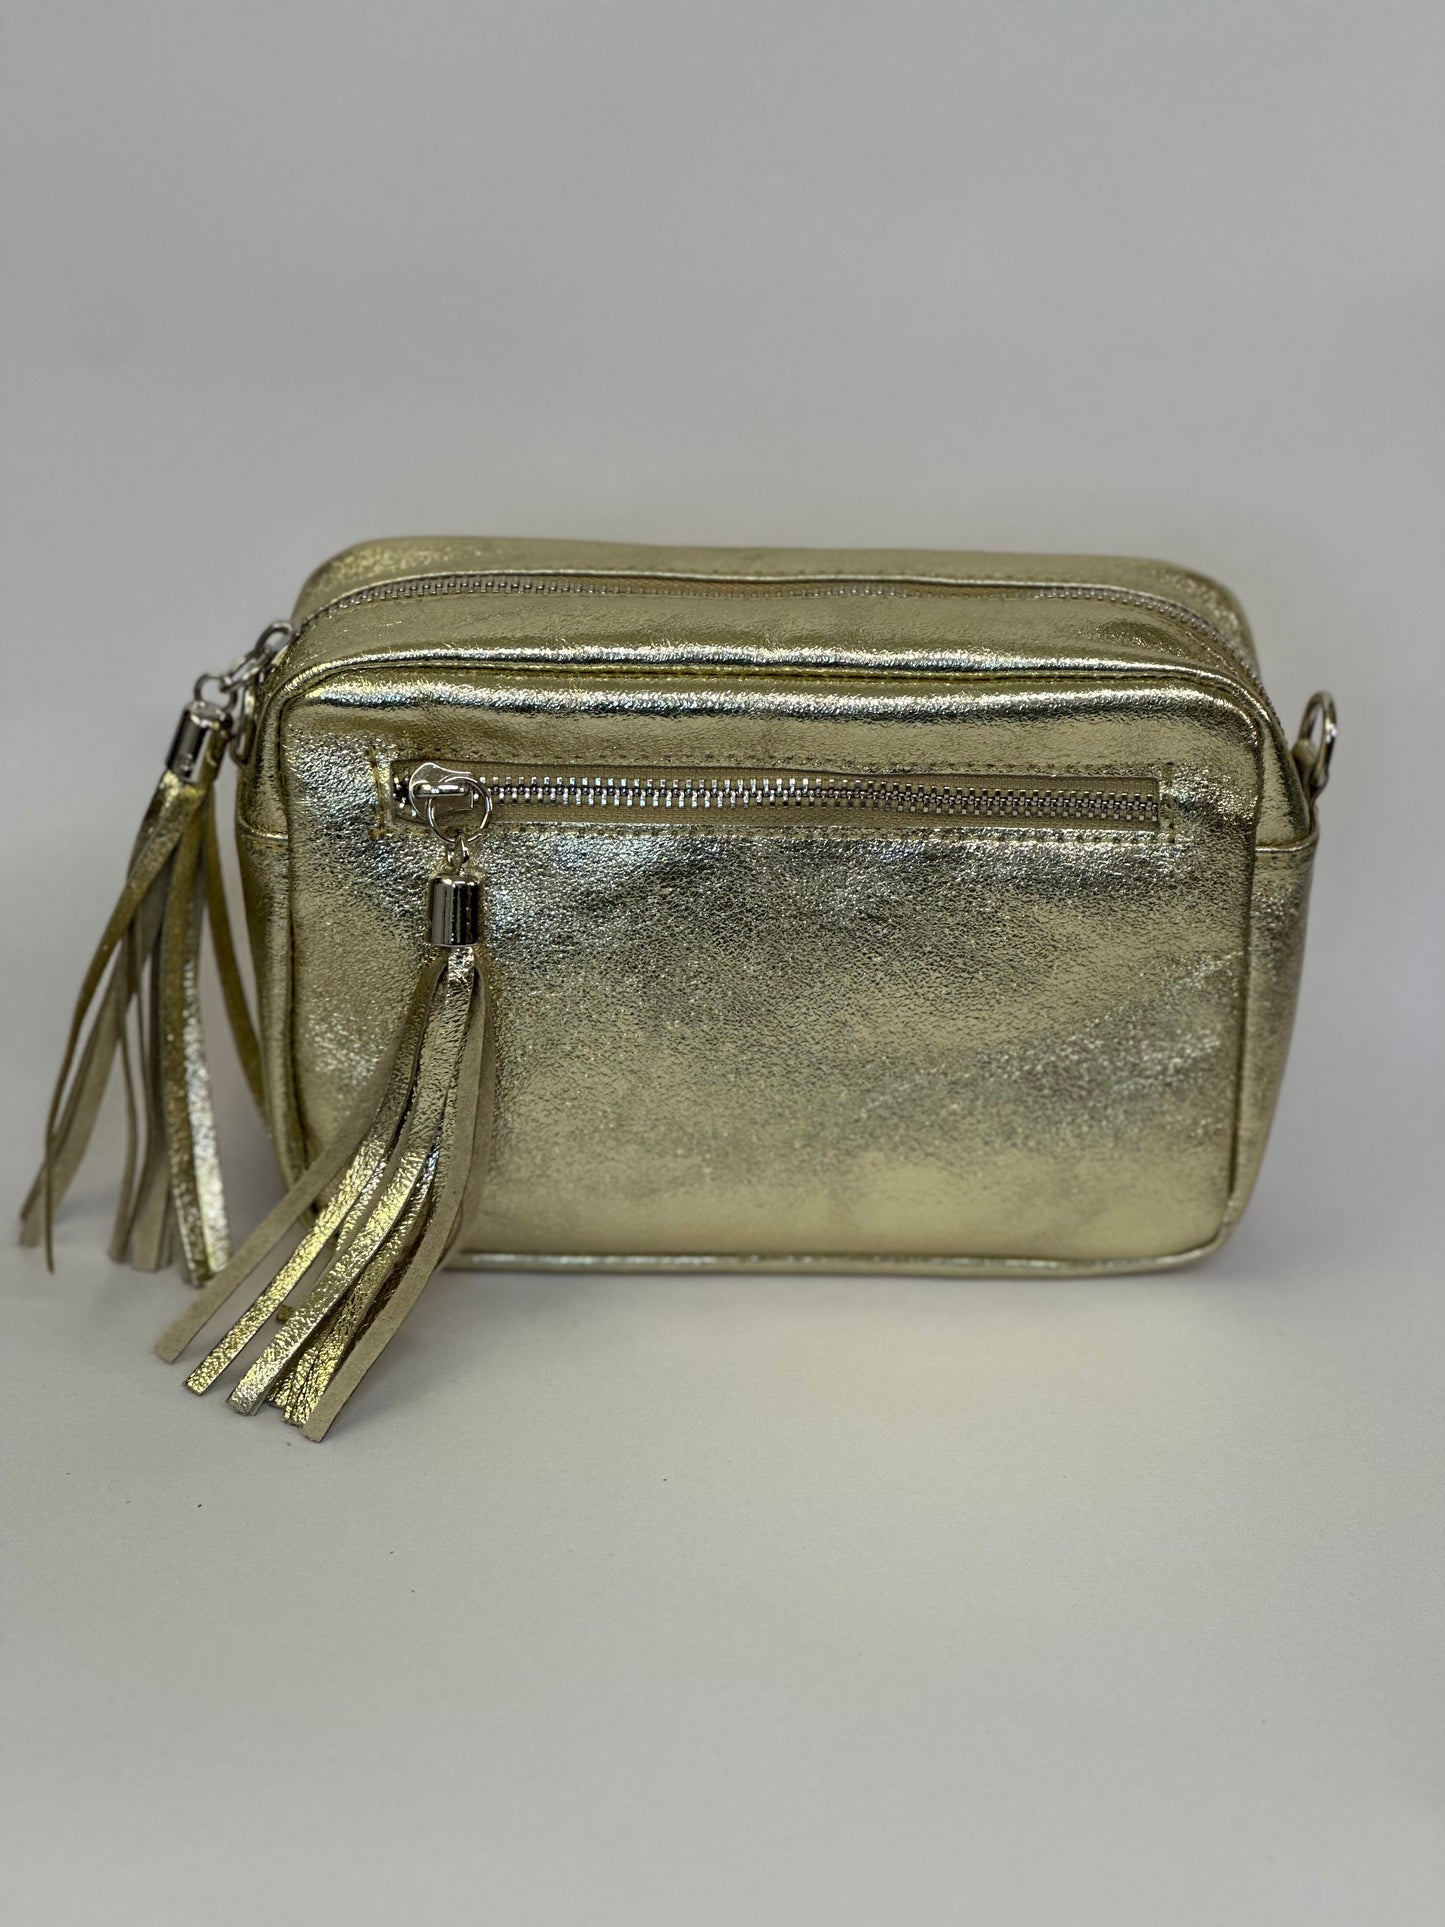 Metallic Gold Camera Bag - Real Leather